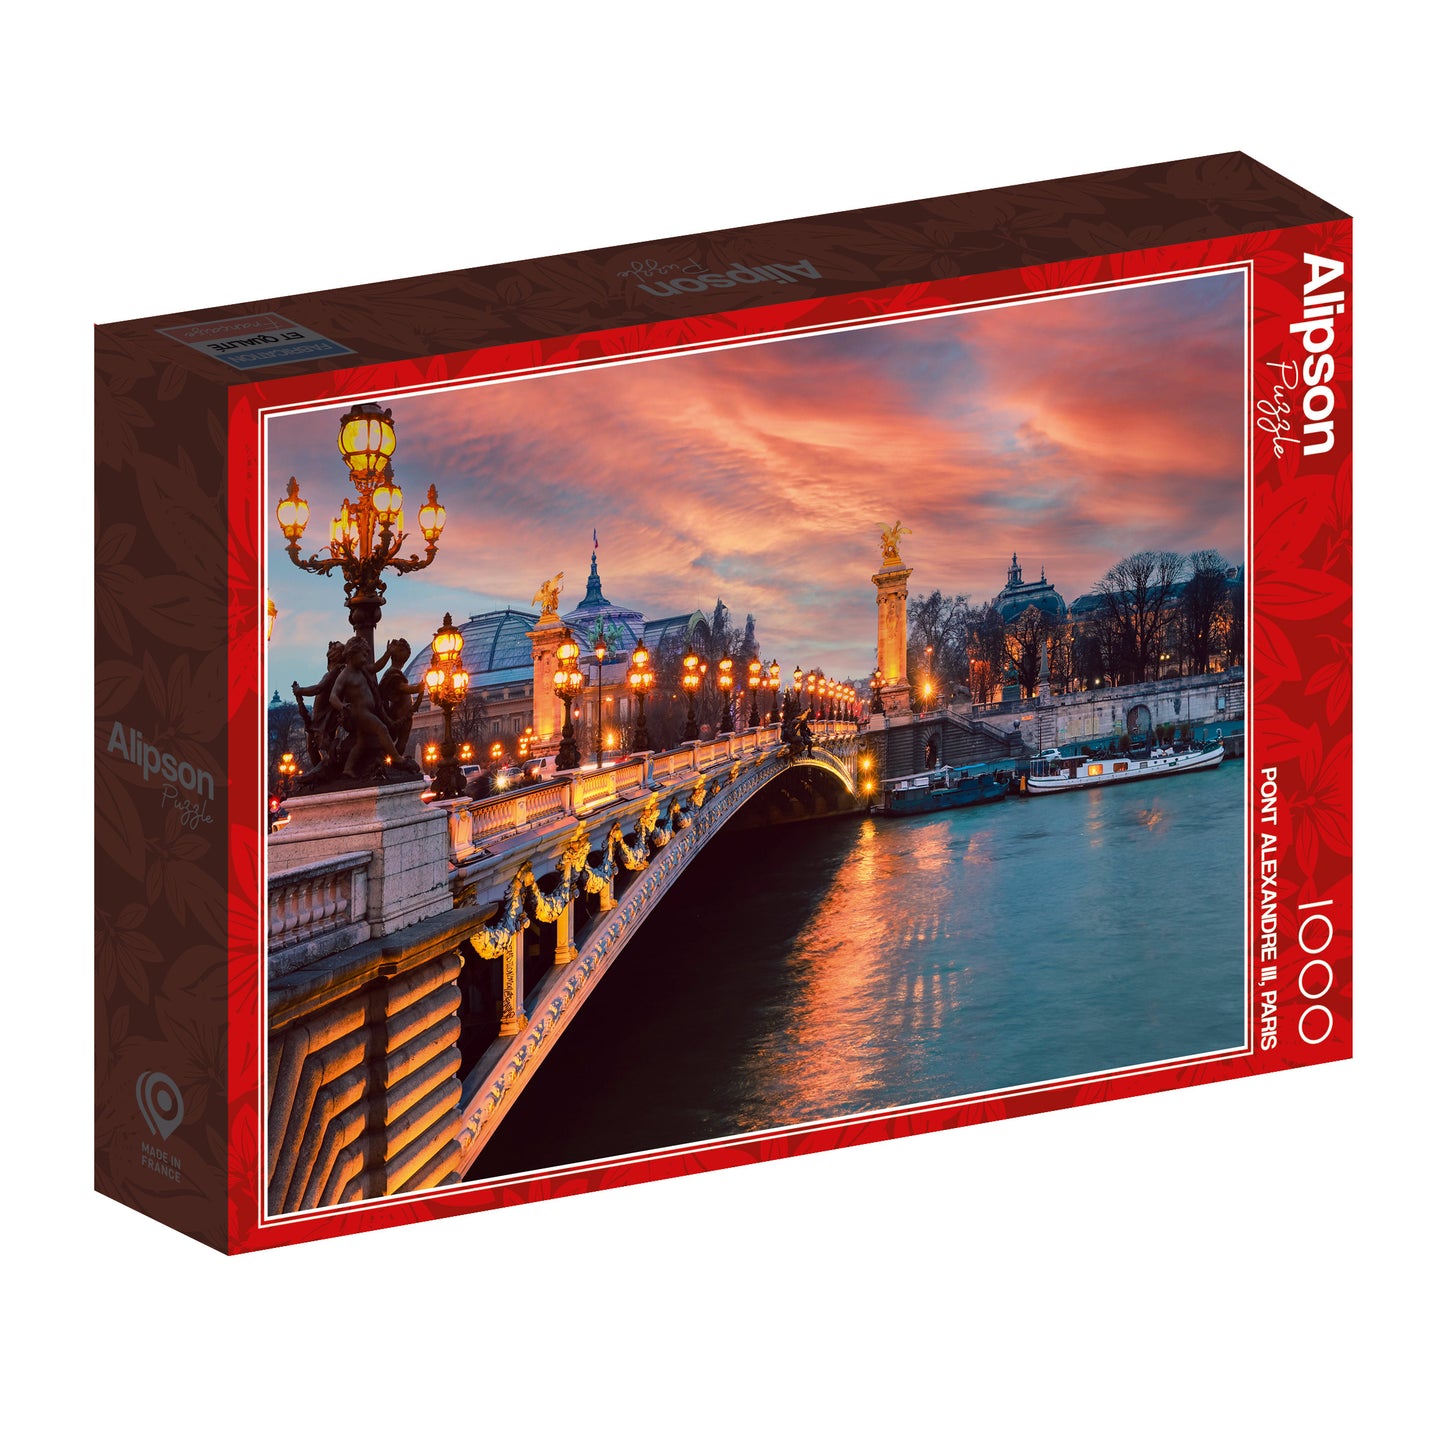 Alipson - Pont Alexandre III, Paris - 1000 Piece Jigsaw Puzzle